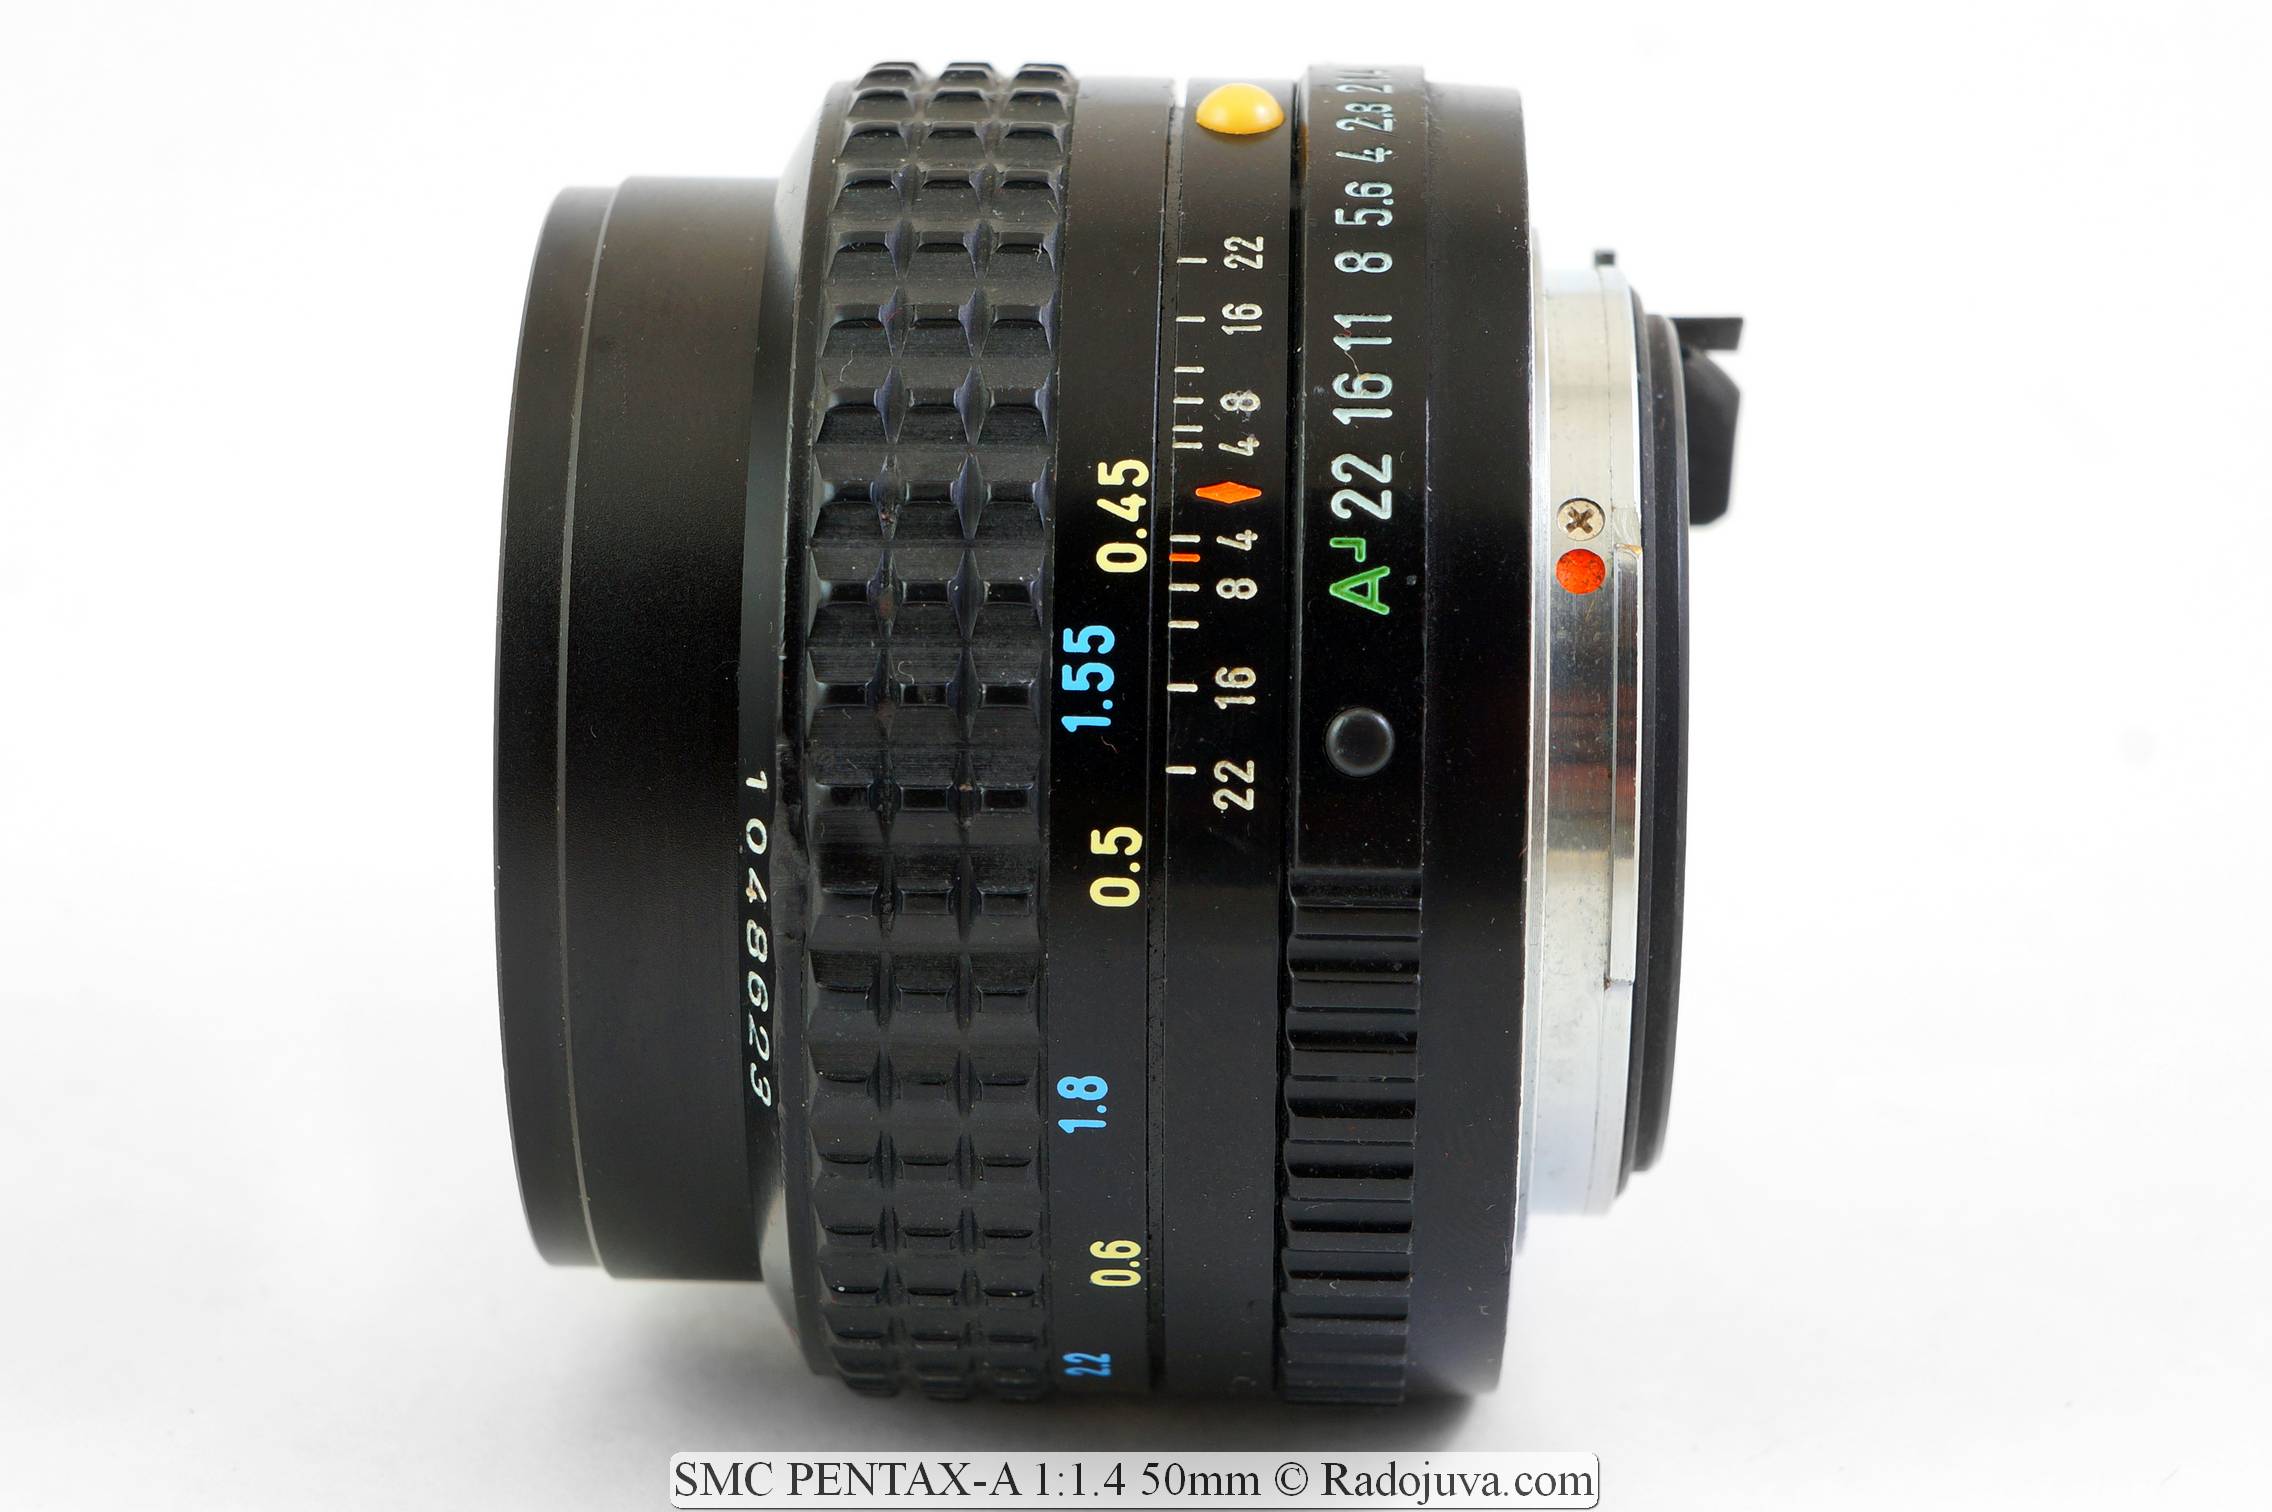 SMC PENTAX-A 1:1.4 50 mm